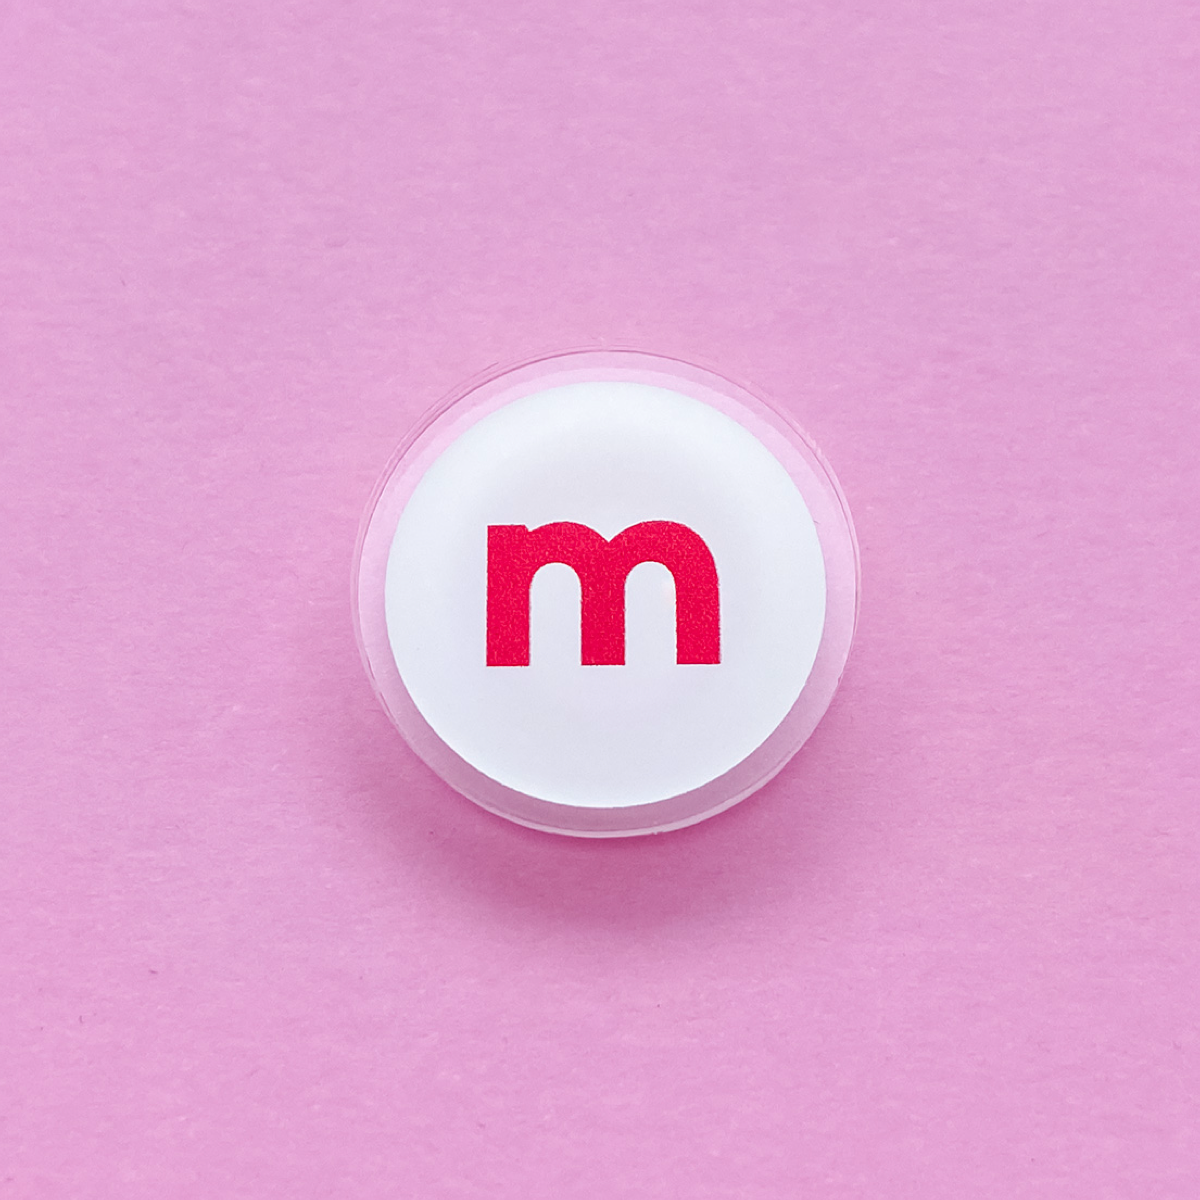 Momoyoga logo pin